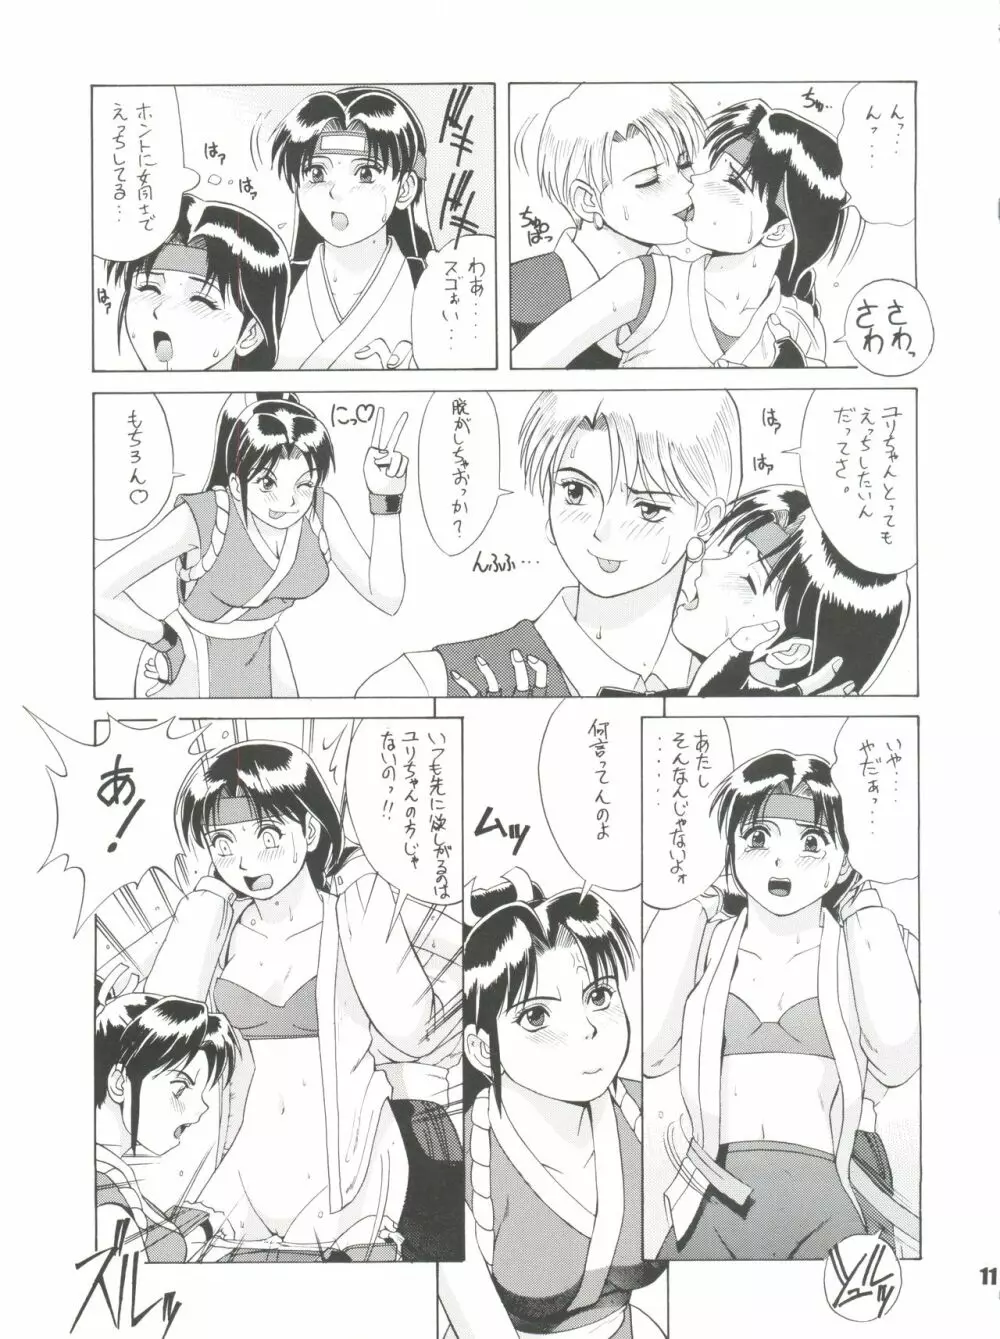 The Yuri&Friends '96 - page10